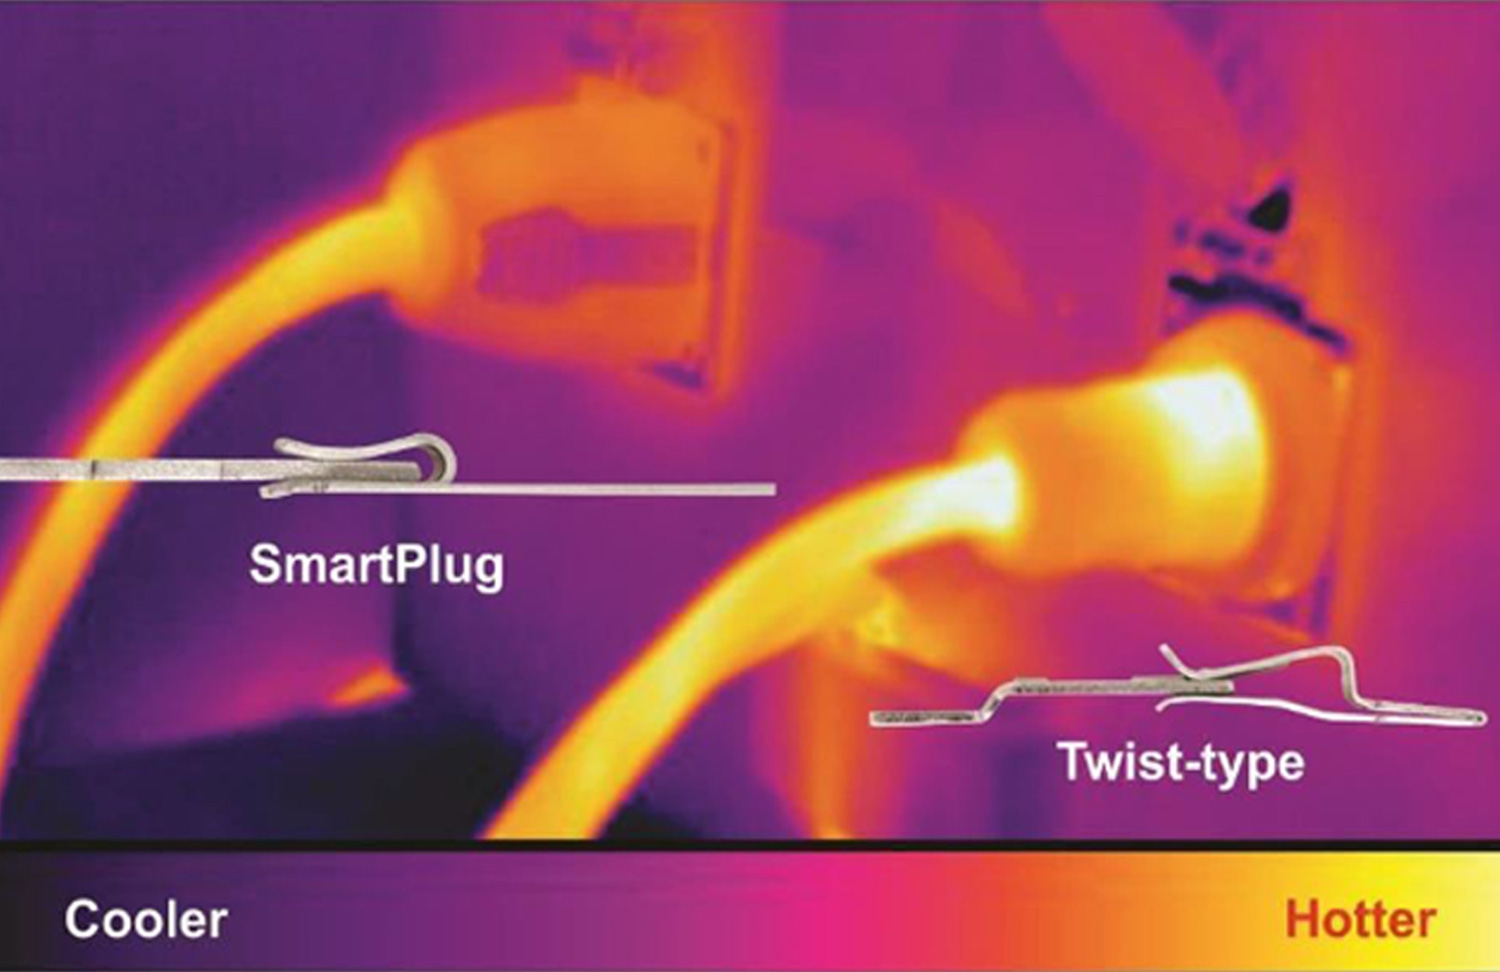 thermal image of a SmartPlug